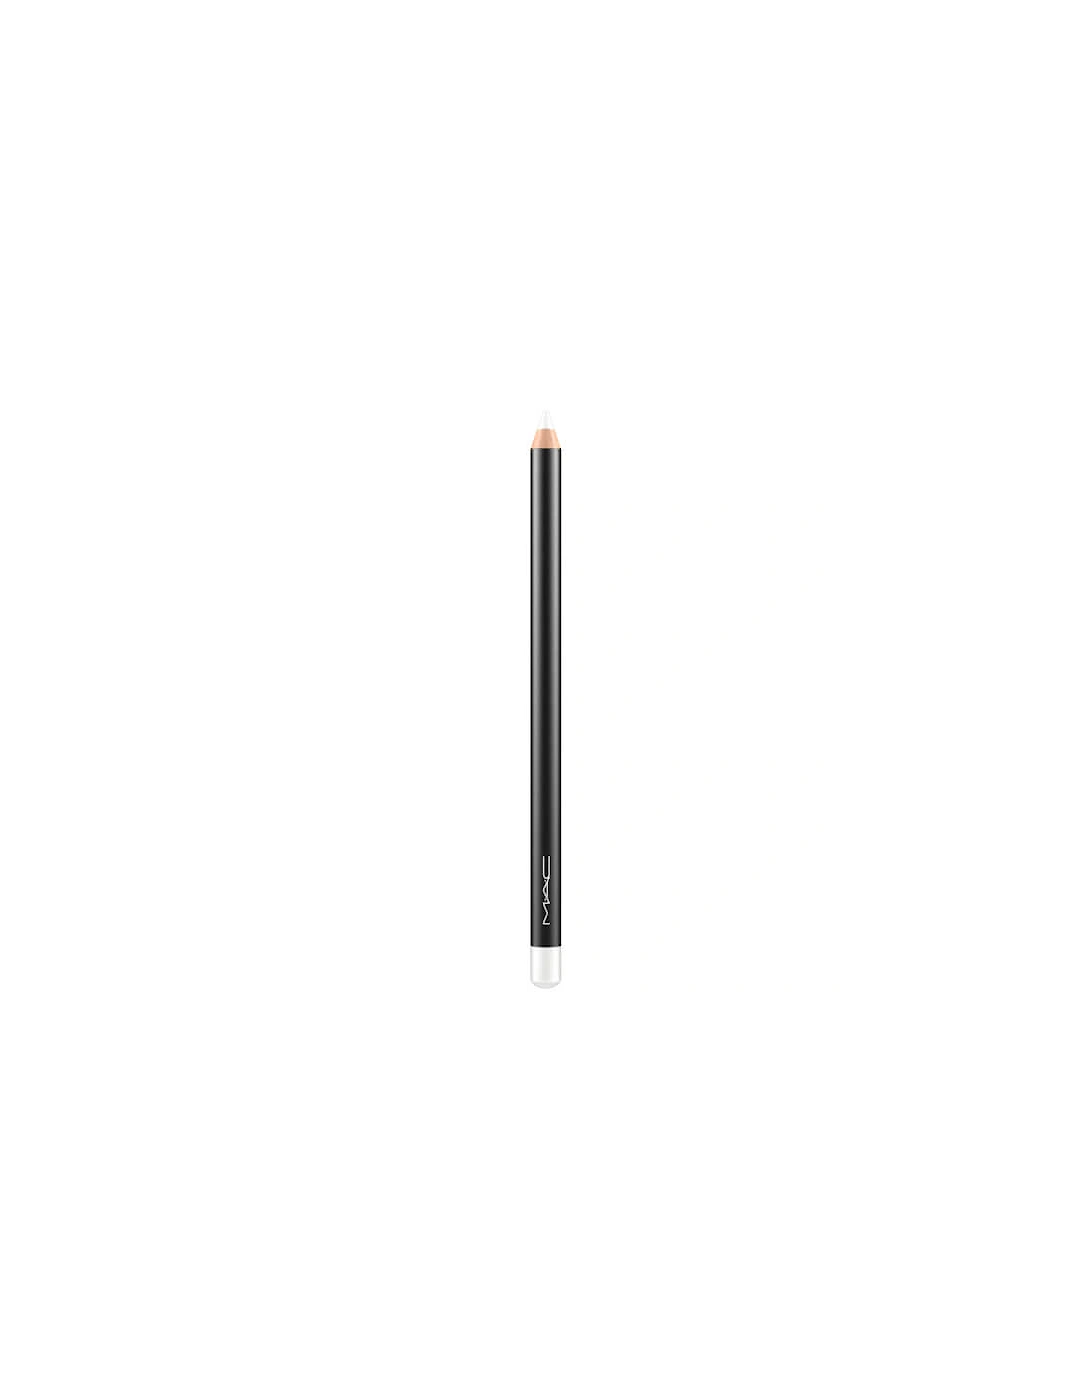 Eye Kohl Pencil Liner - Fascinating, 2 of 1